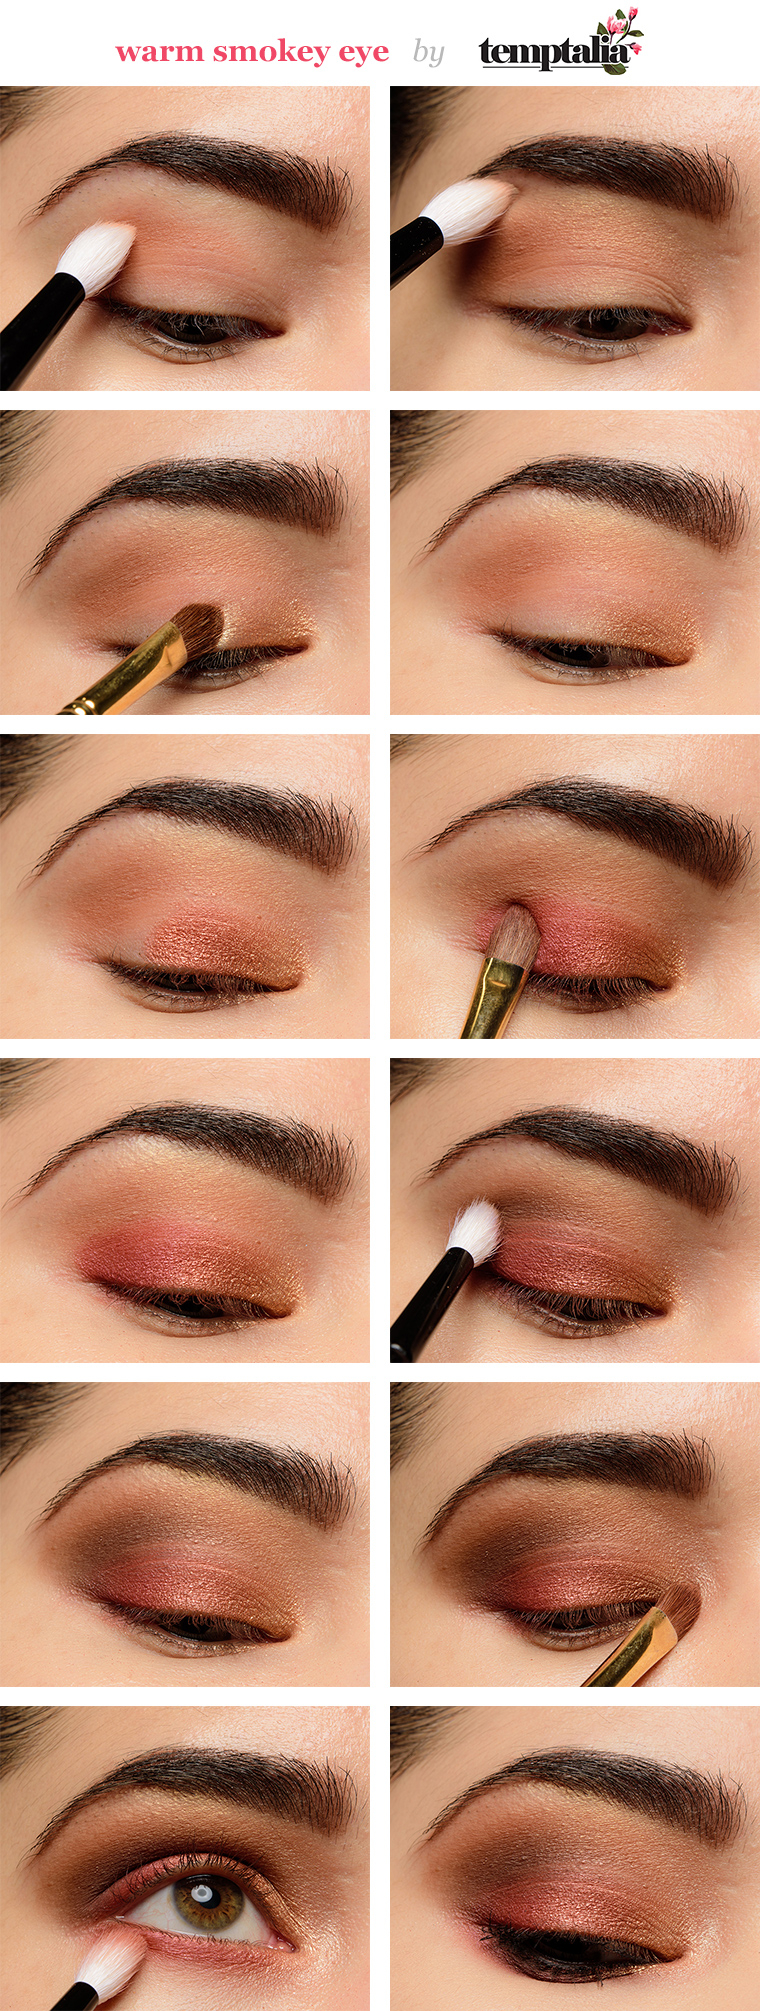 Eye Makeup Tutorials How To Apply Eyeshadow Smokey Eye Makeup Tutorial For Beginners